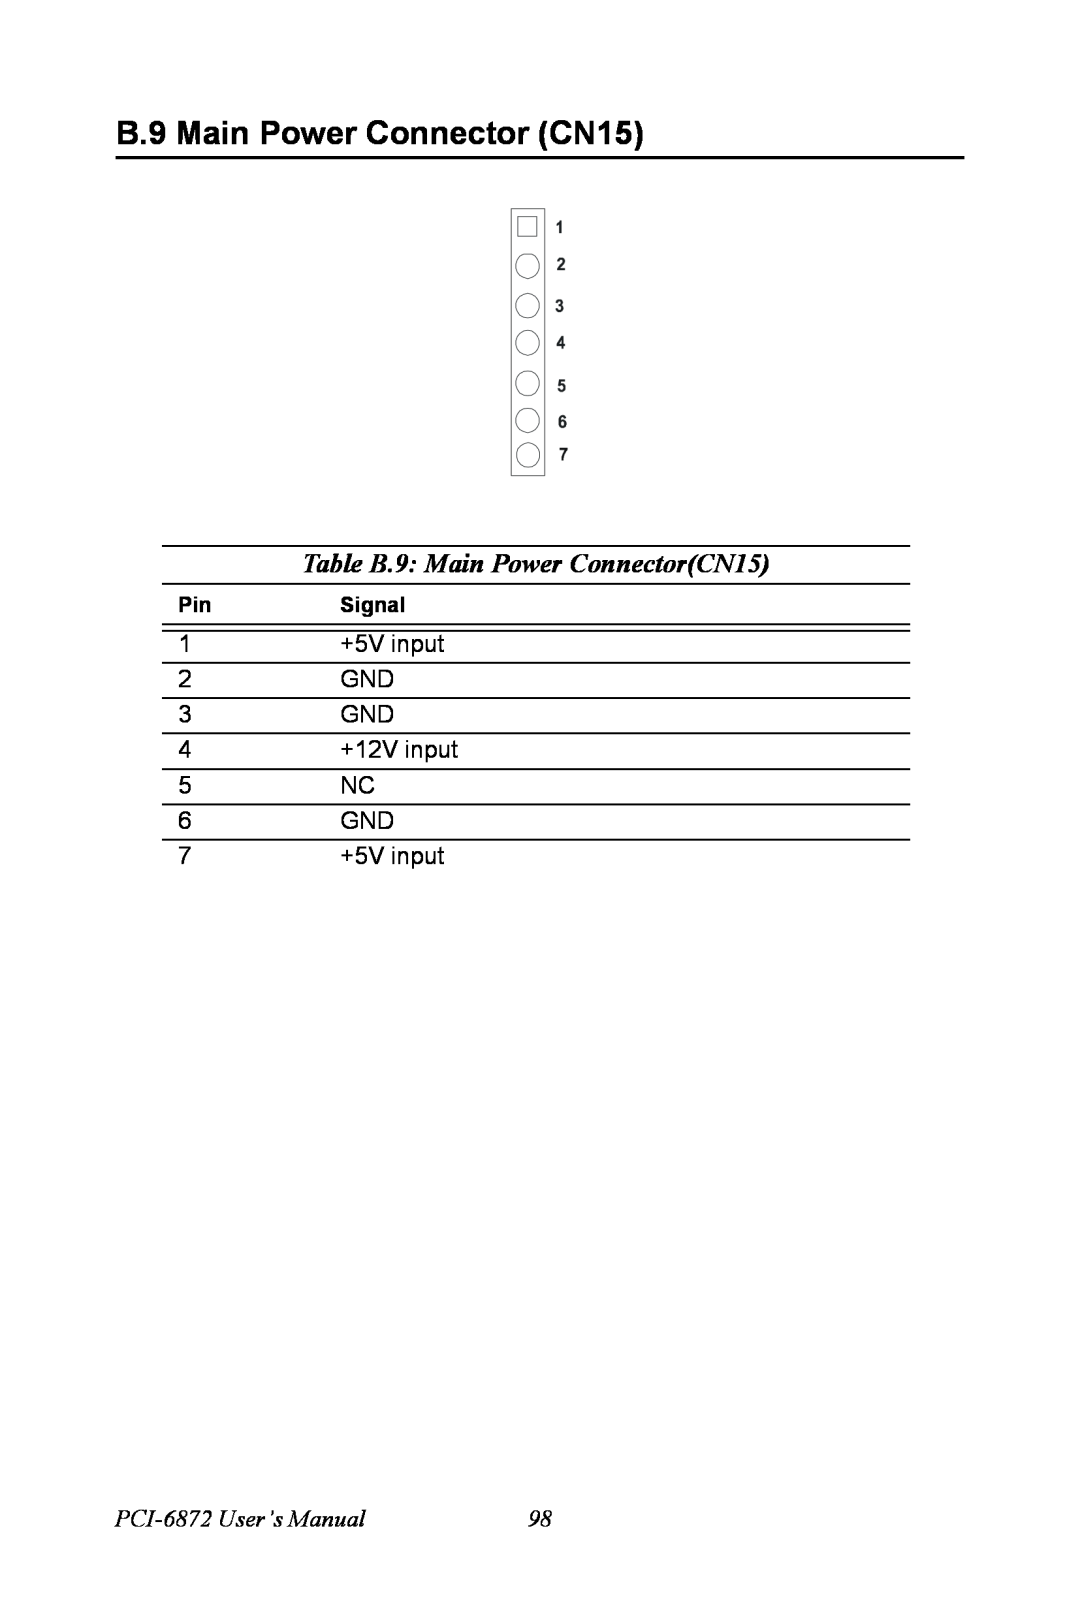 Advantech B.9 Main Power Connector CN15, Table B.9 Main Power ConnectorCN15, PCI-6872 User’s Manual, PinSignal 